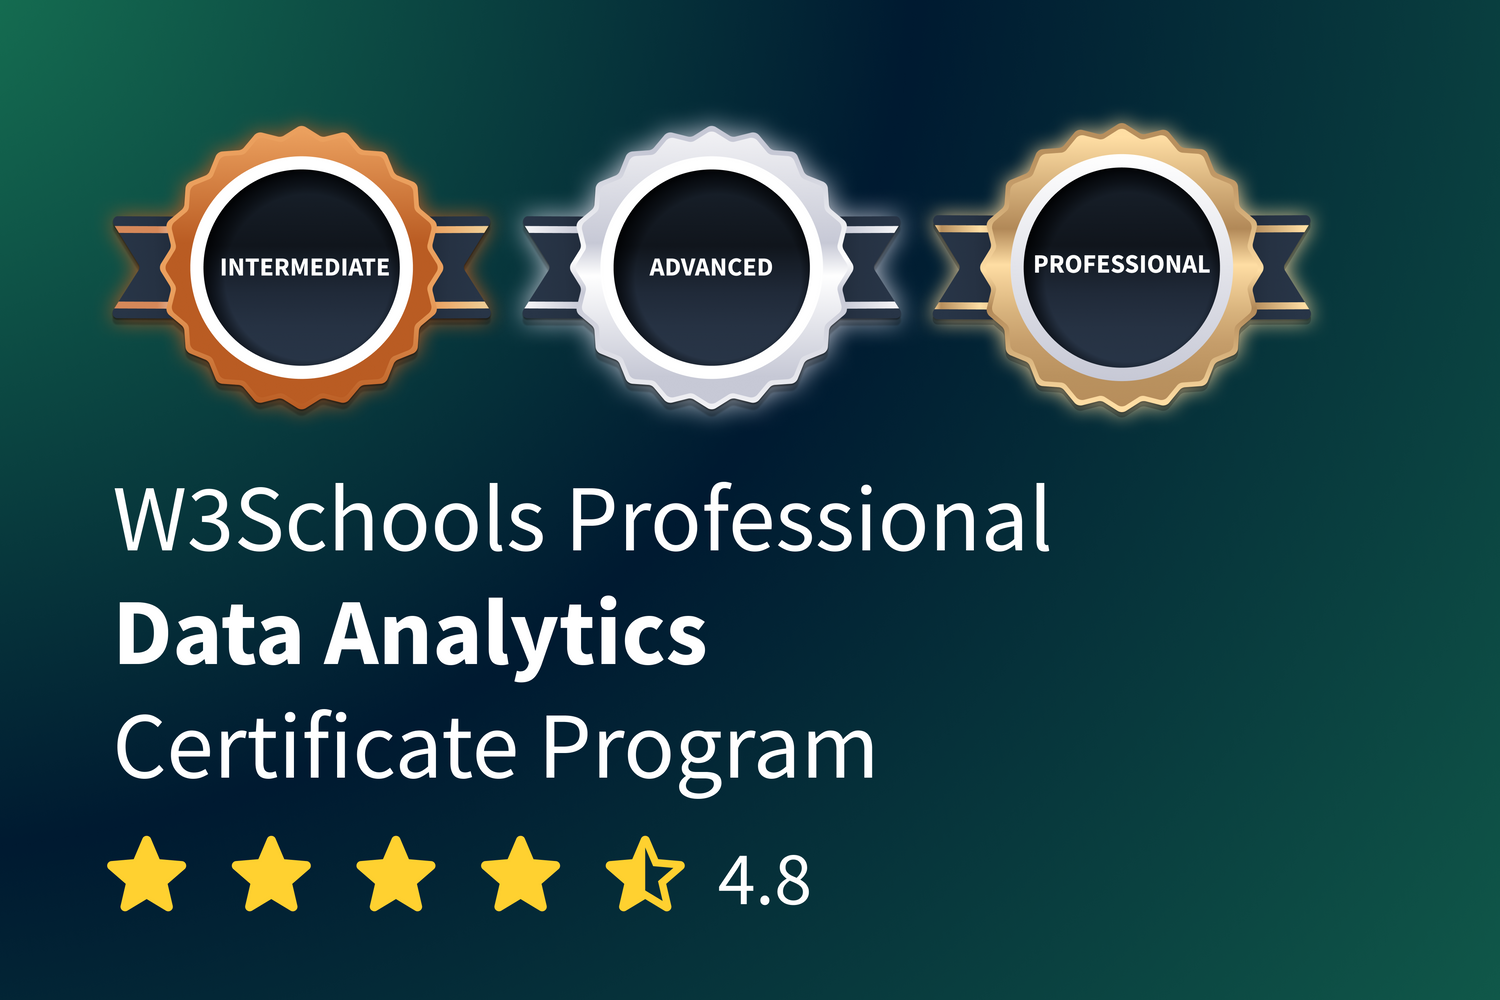 W3Schools Certification Program